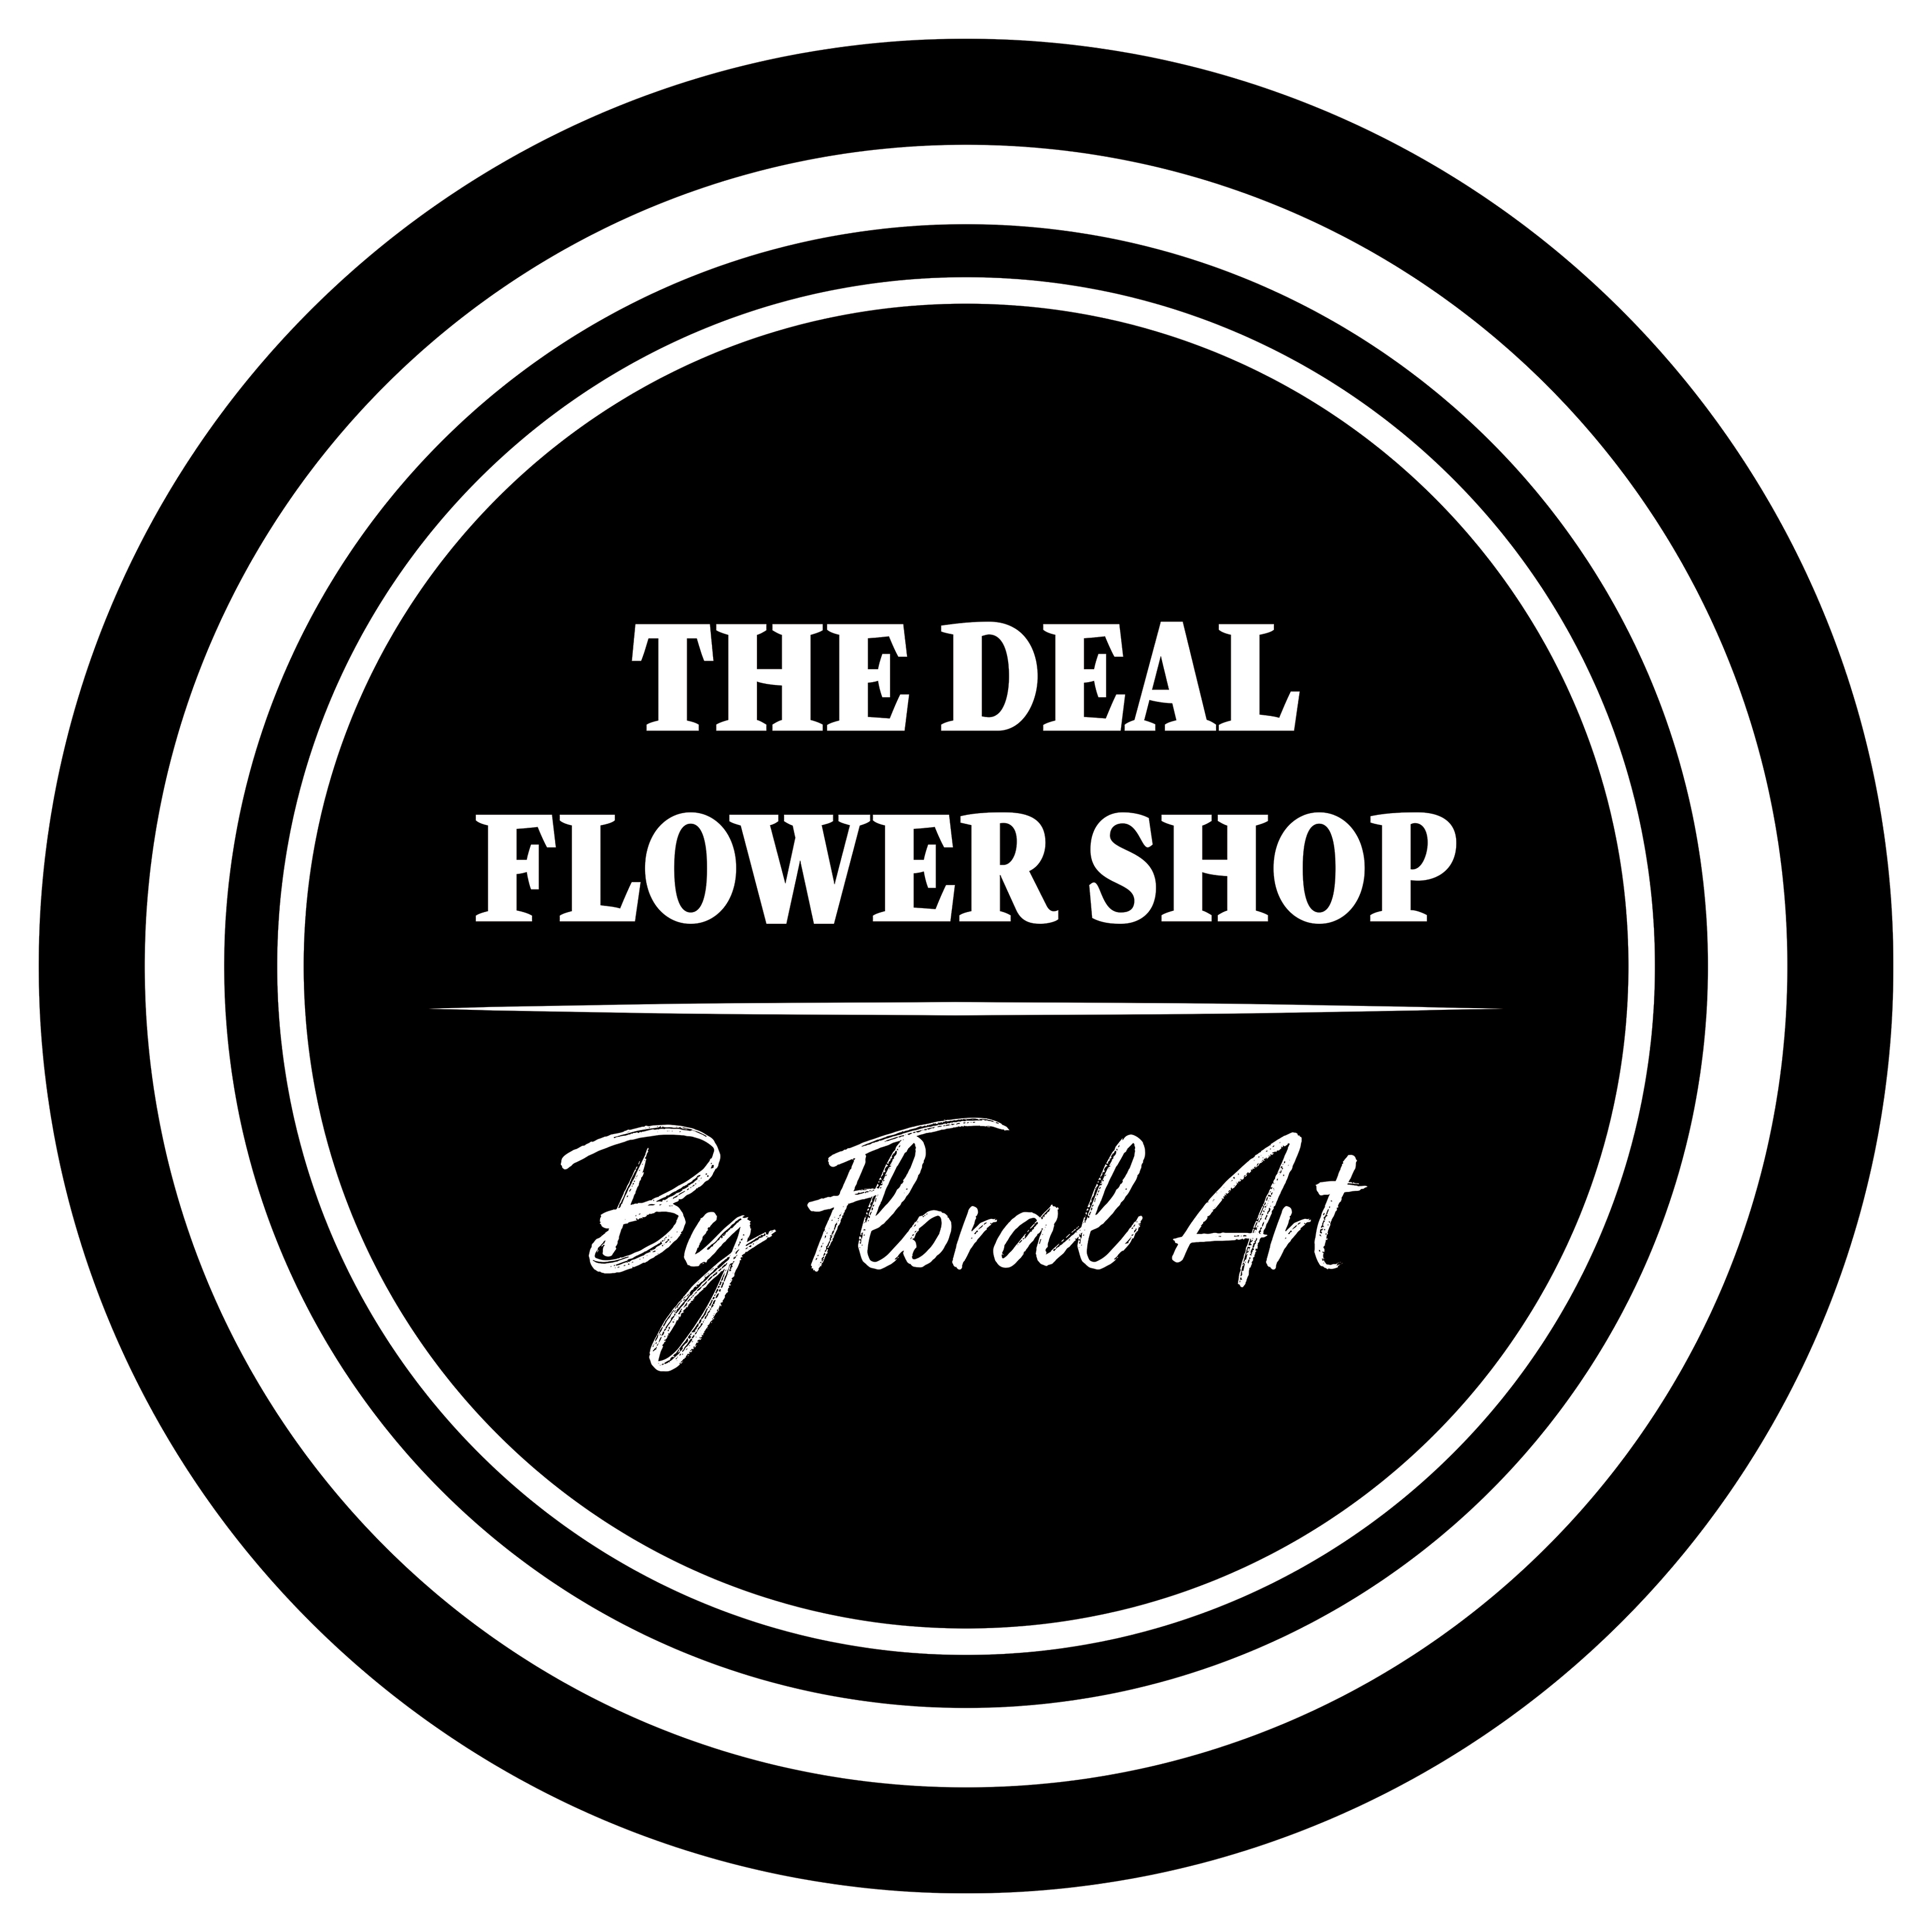 The Deal Flower Shop